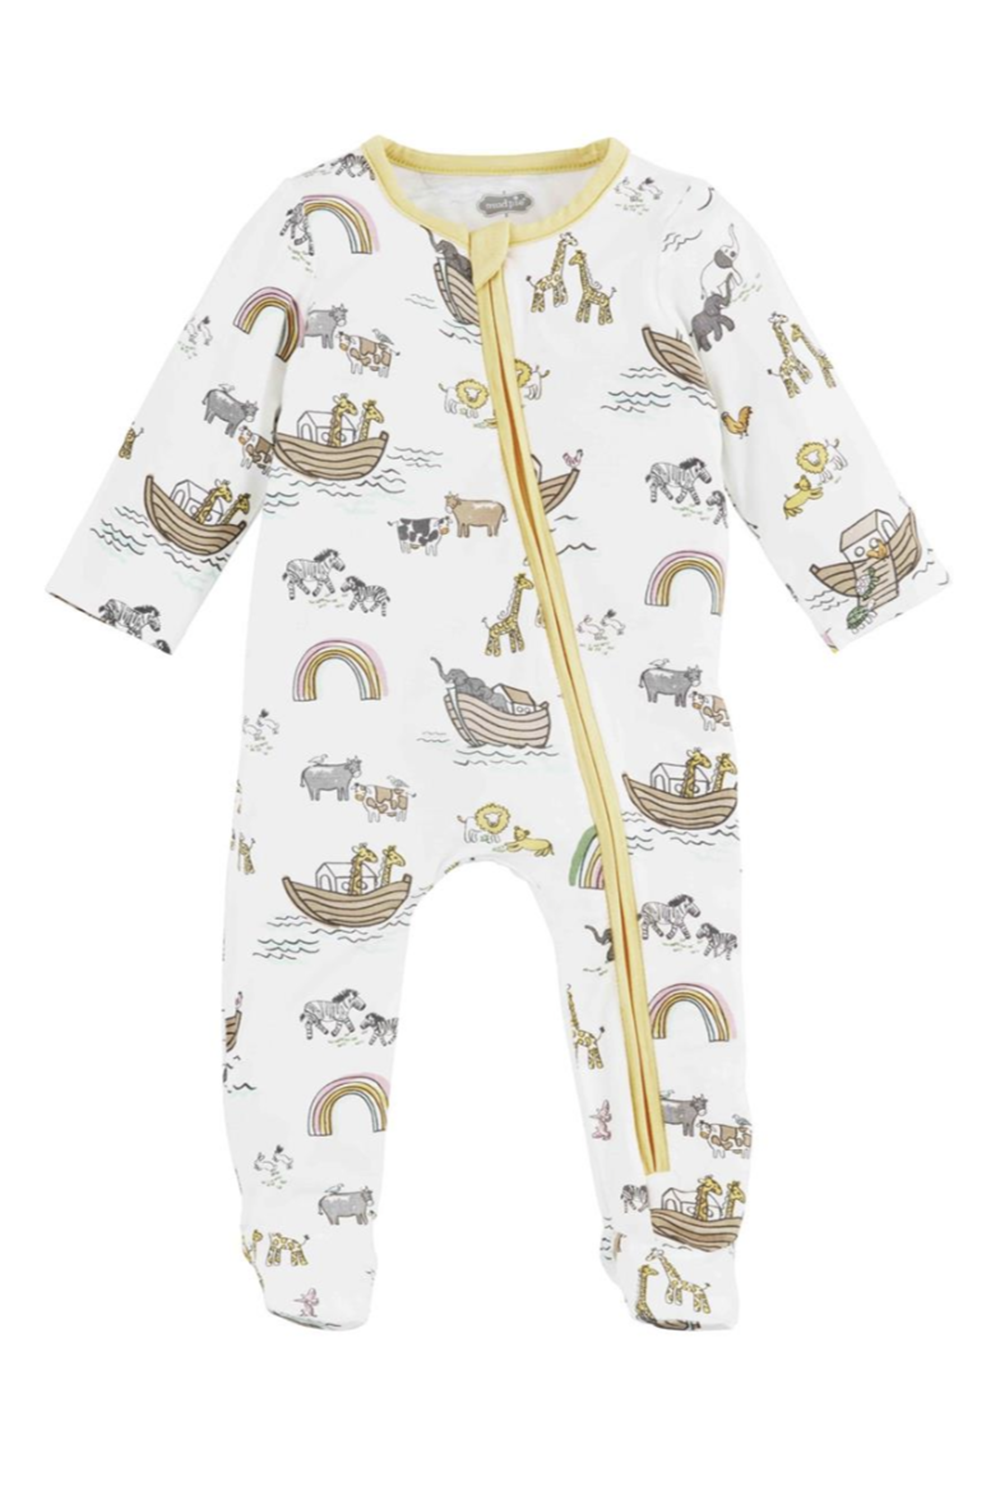 Baby Sleeper Outfit - Noah's Ark